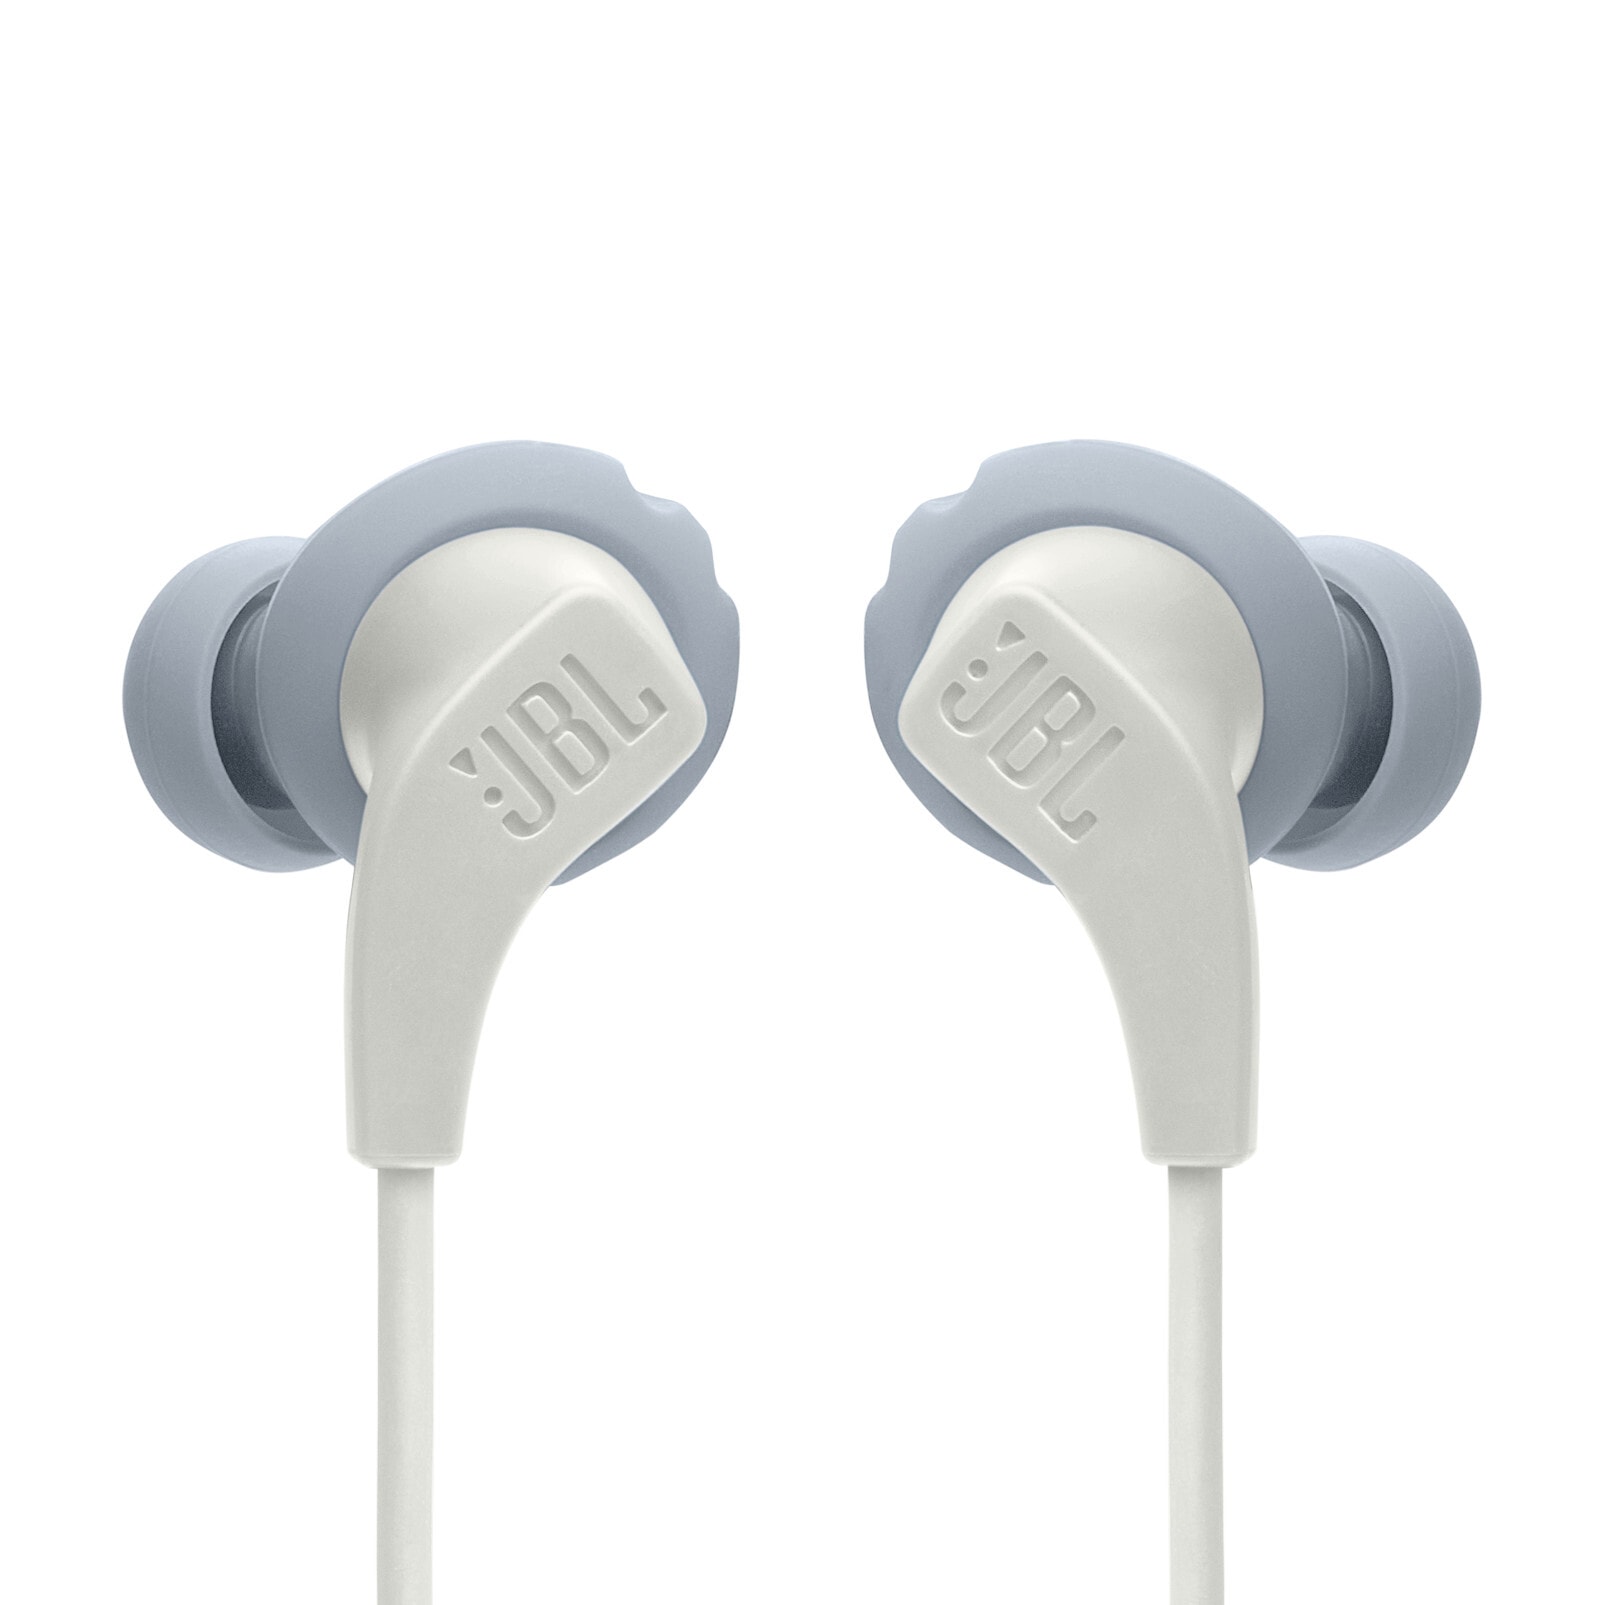 jetzt In-Ear-Kopfhörer 2« wireless Run »Endurance JBL kaufen OTTO BT bei